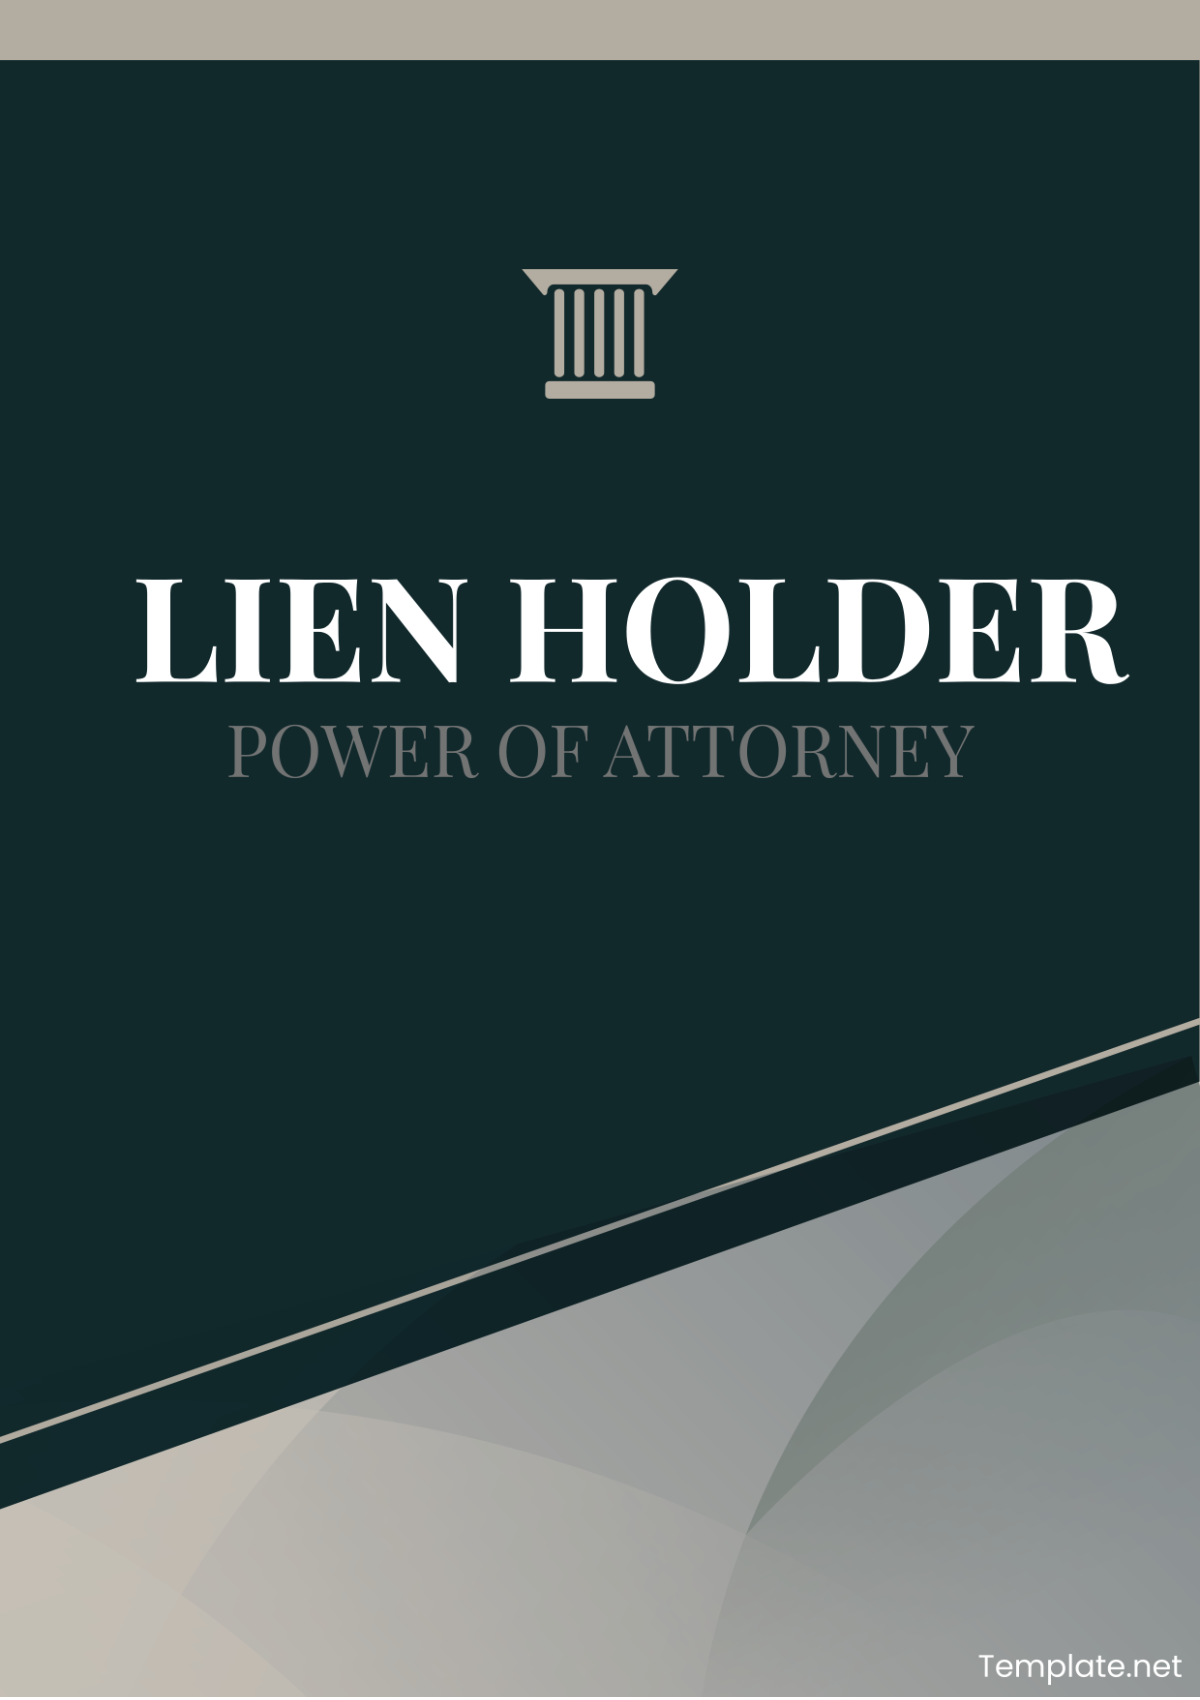 Lien Holder Power of Attorney Template